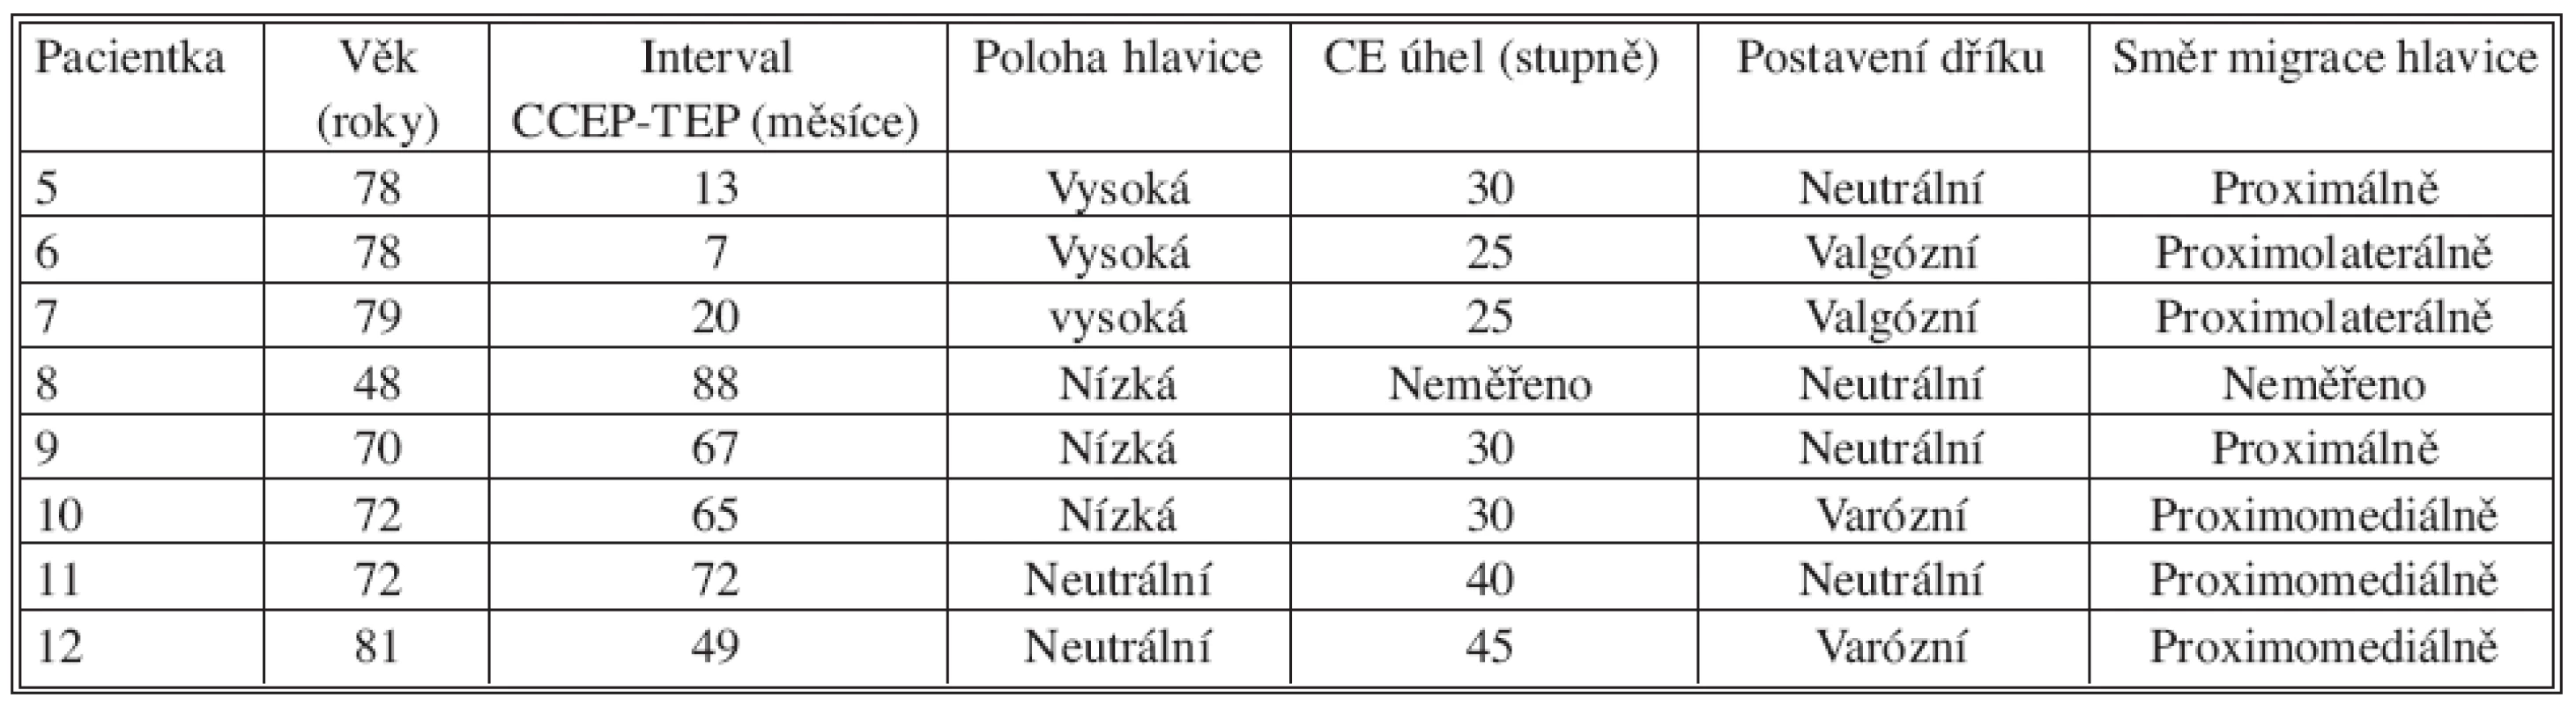 Přehled pacientů s výraznou erozí acetabula
Tab. 2. Overview of patients with a marked erosion of the acetabulum